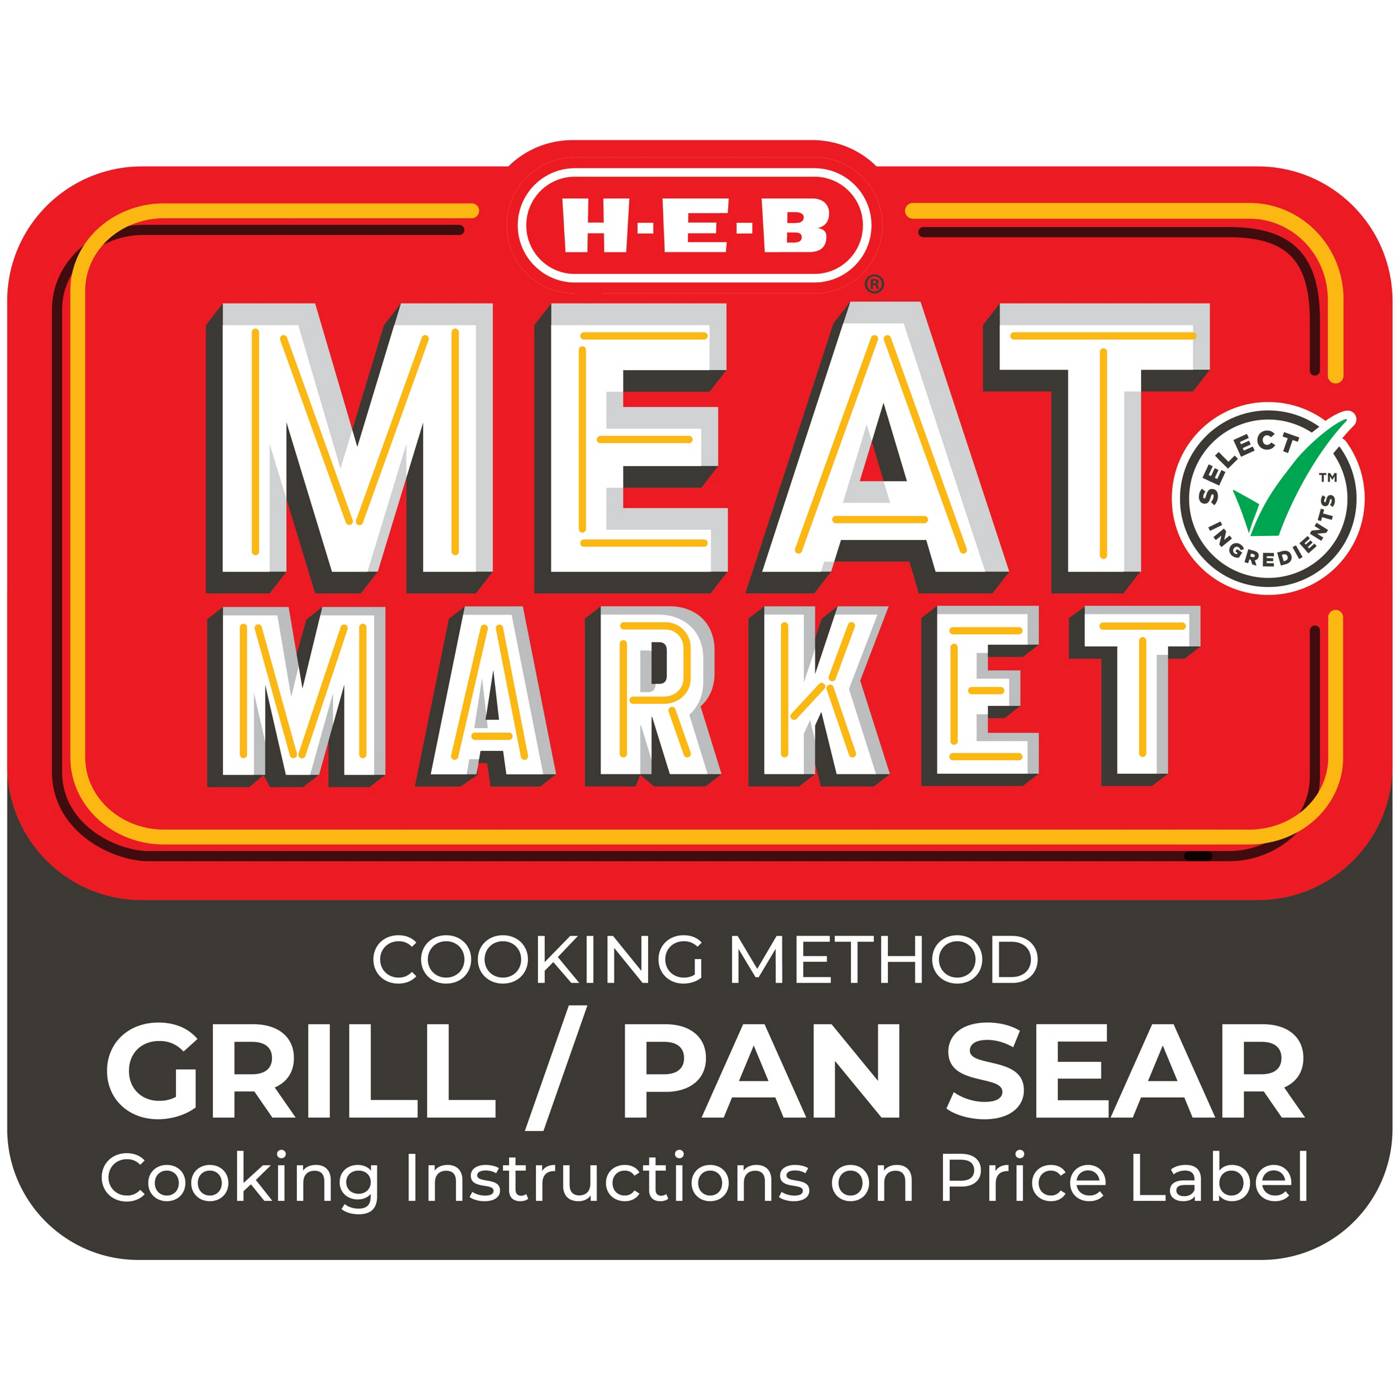 meat market sign